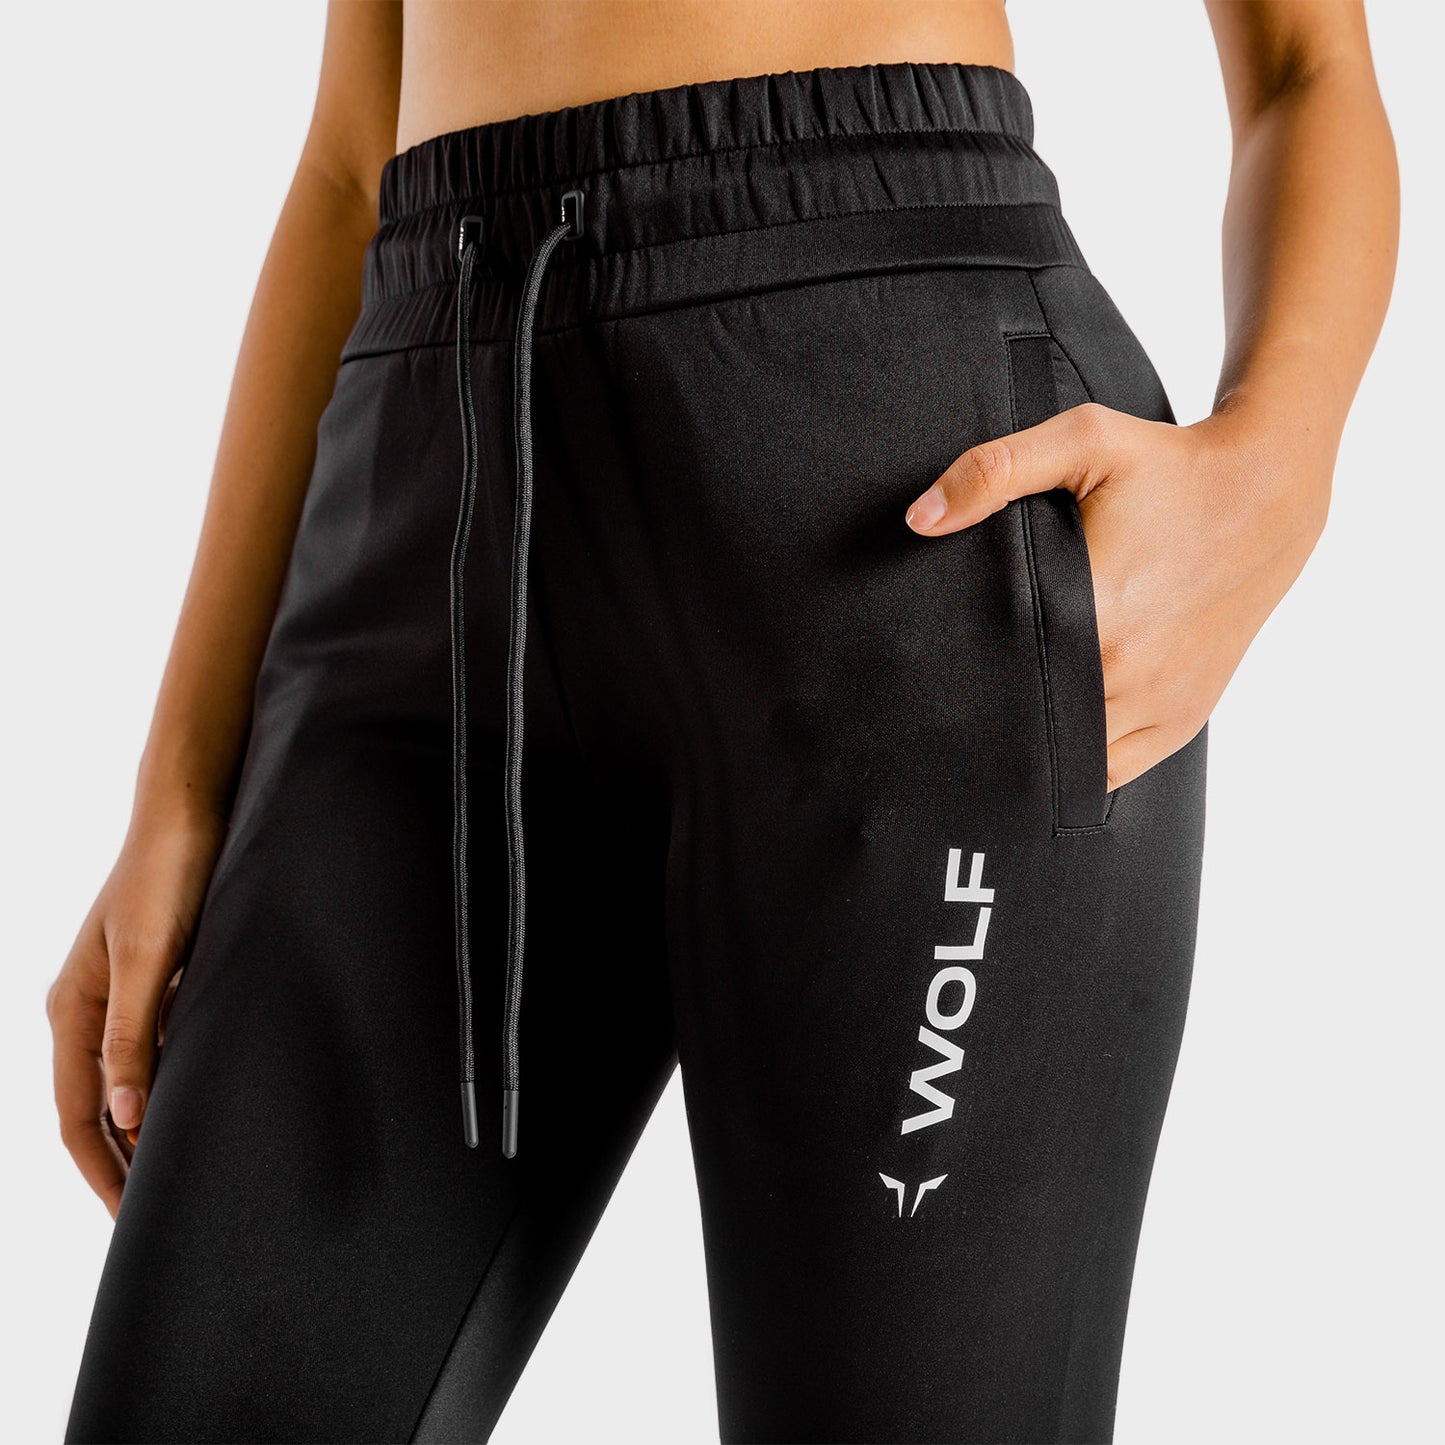 squatwolf-pants-for-women-primal-joggers-gym-black-workout-clothes